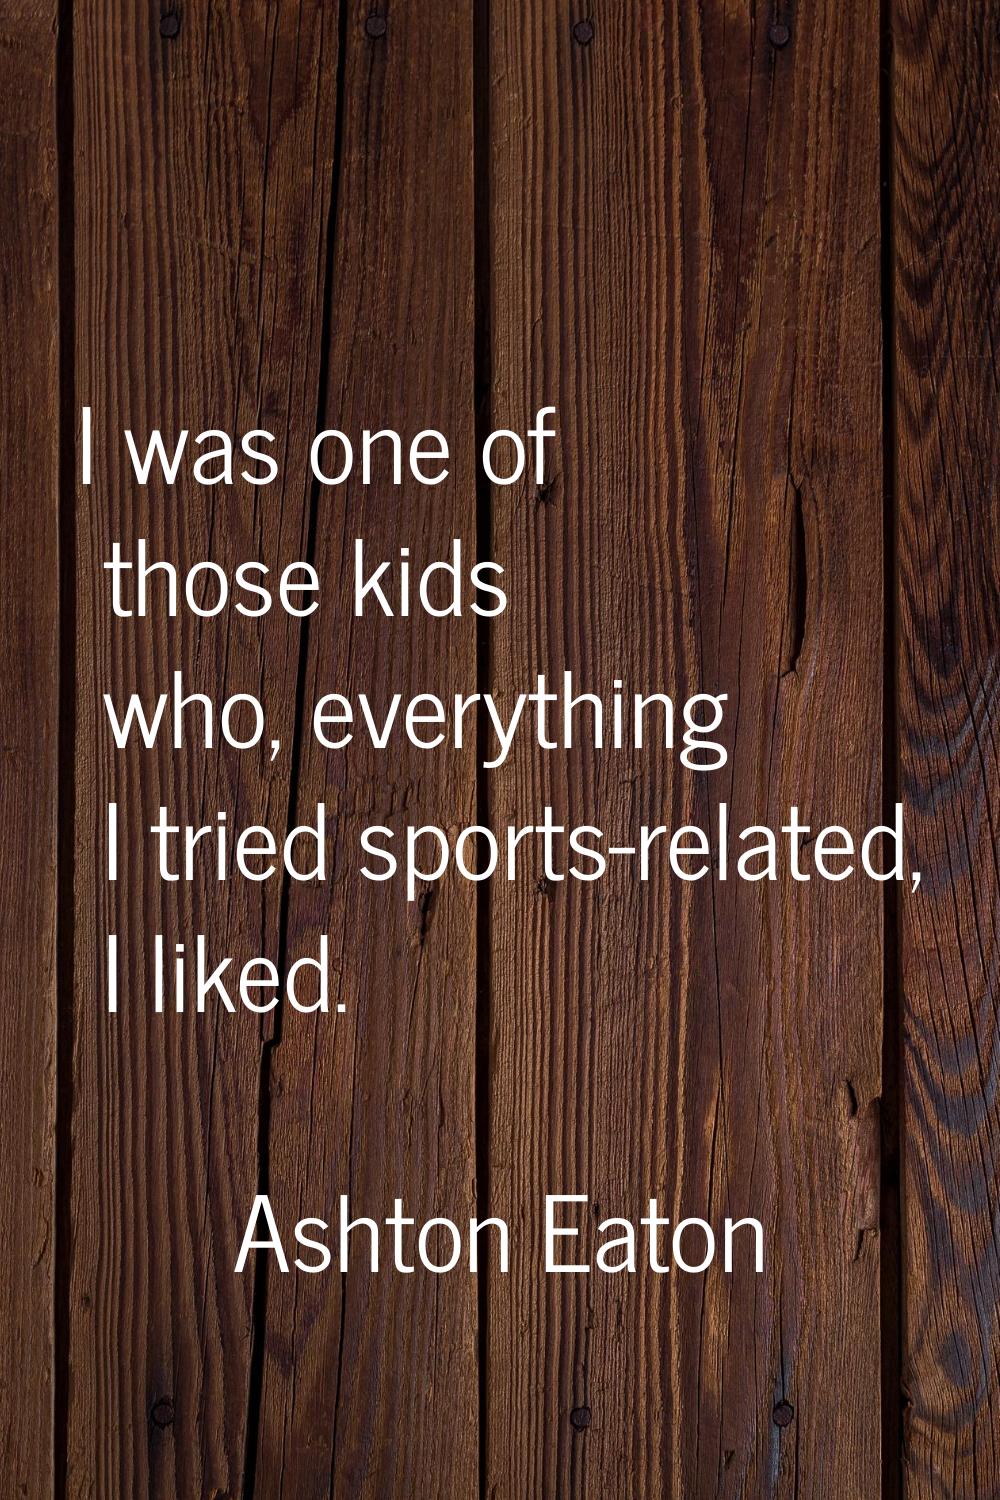 I was one of those kids who, everything I tried sports-related, I liked.